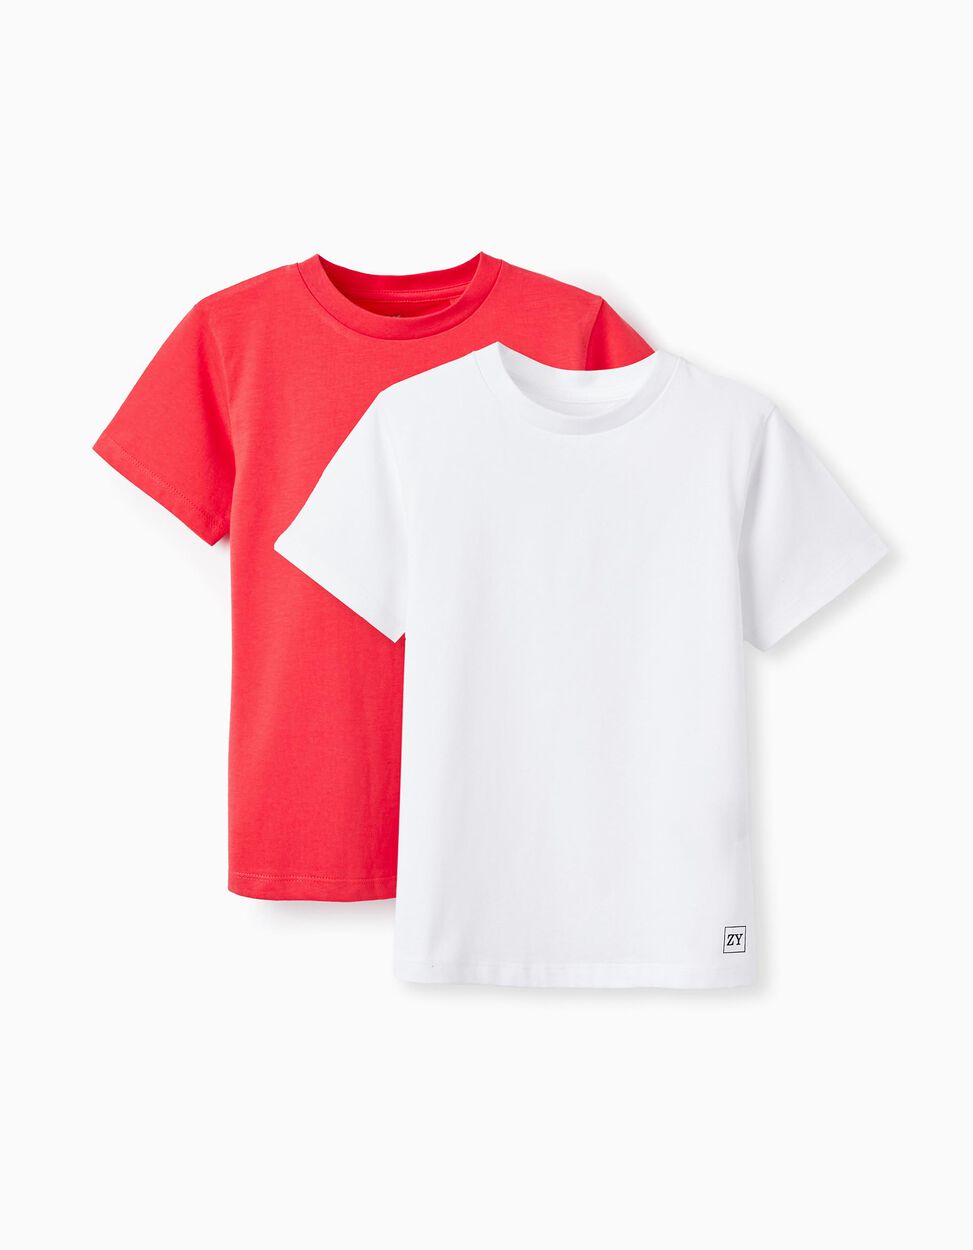 Camiseta de manga corta roja niño